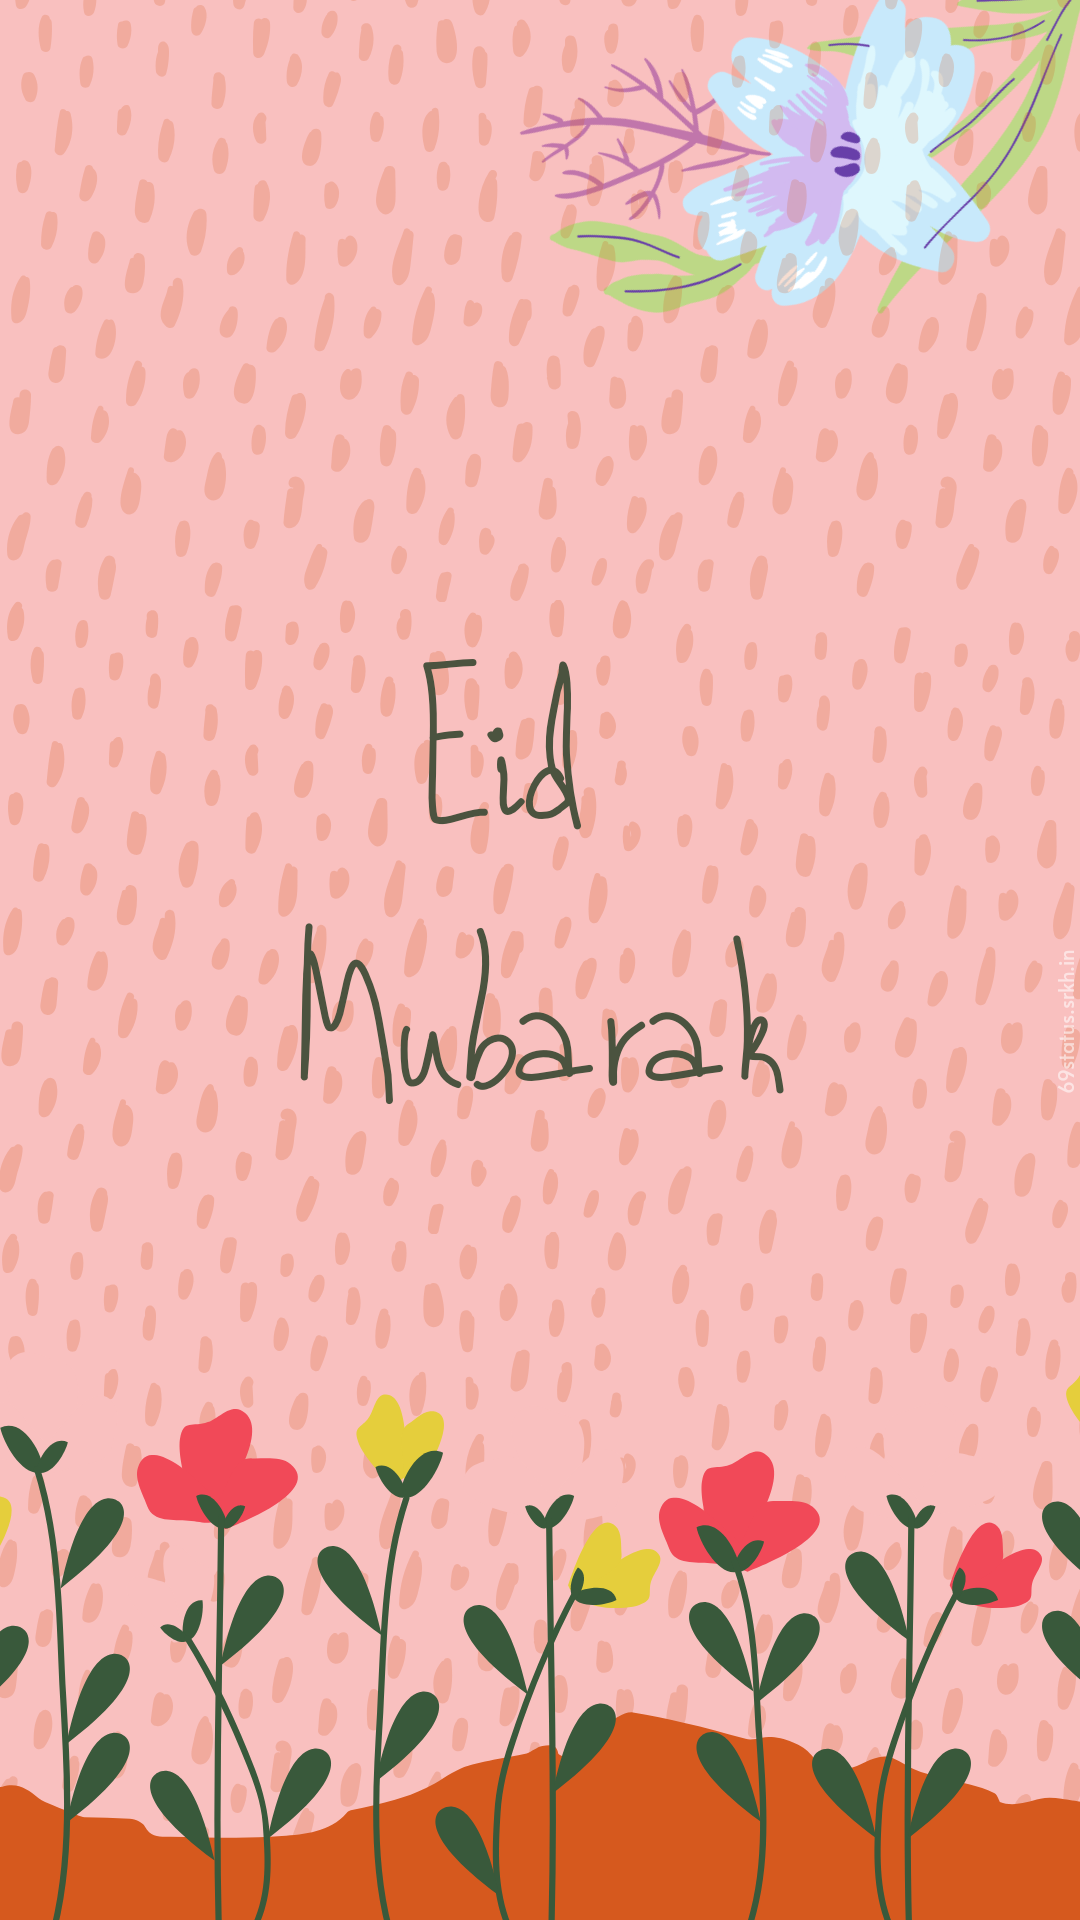 🔥 Eid Mubarak wallpaper flowers pic Download free - Images SRkh